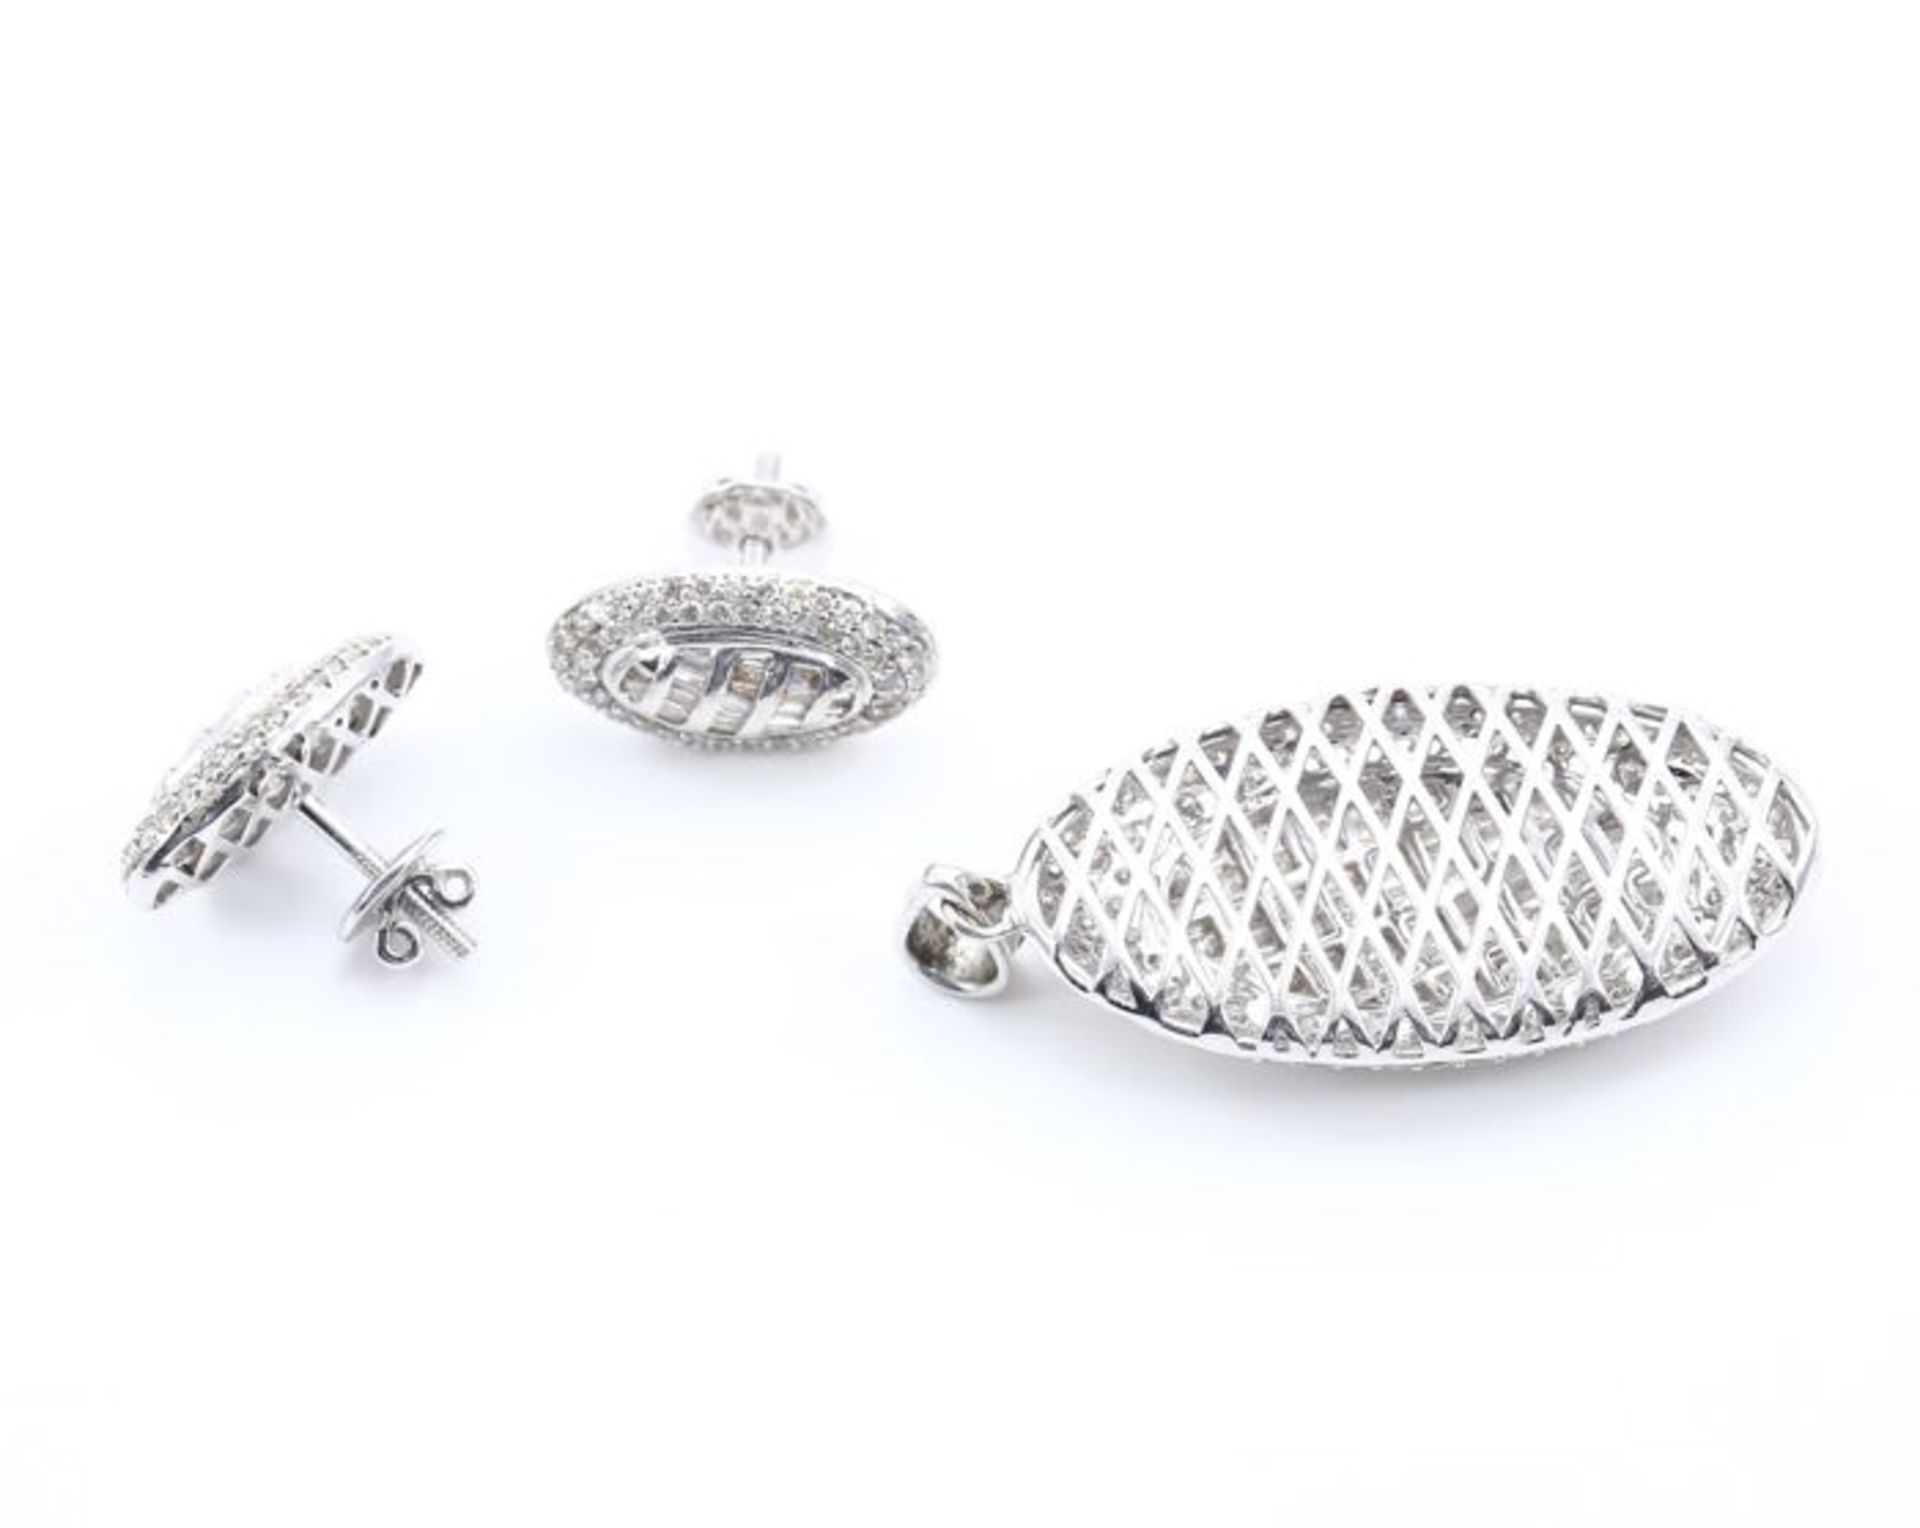 IGI Certified 14 K/585 White Gold Diamond Pendant Necklace with Matching Diamond Earrings - Image 9 of 10